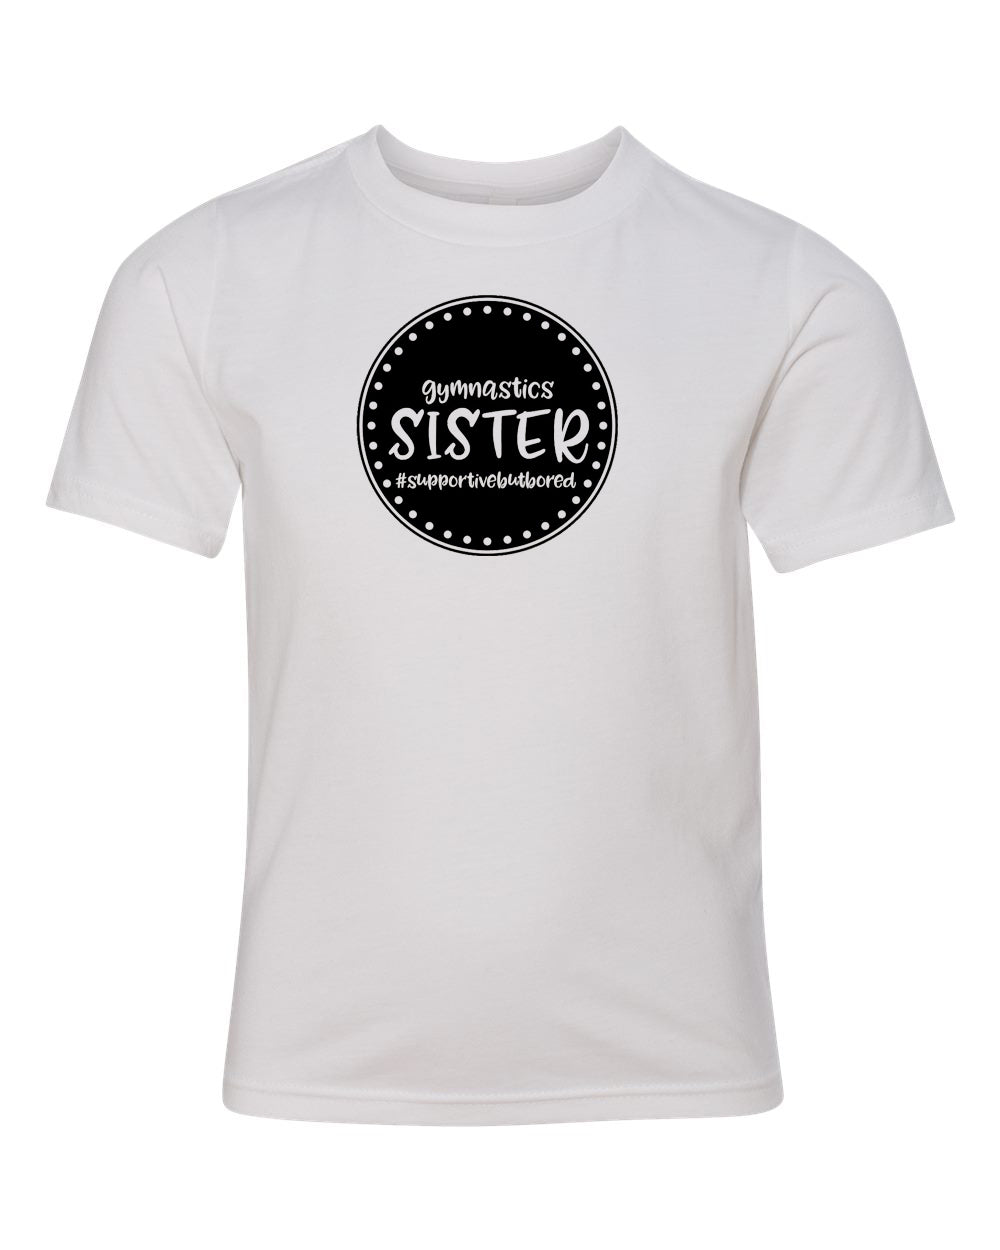 Gymnastics Sister Youth T-Shirt White